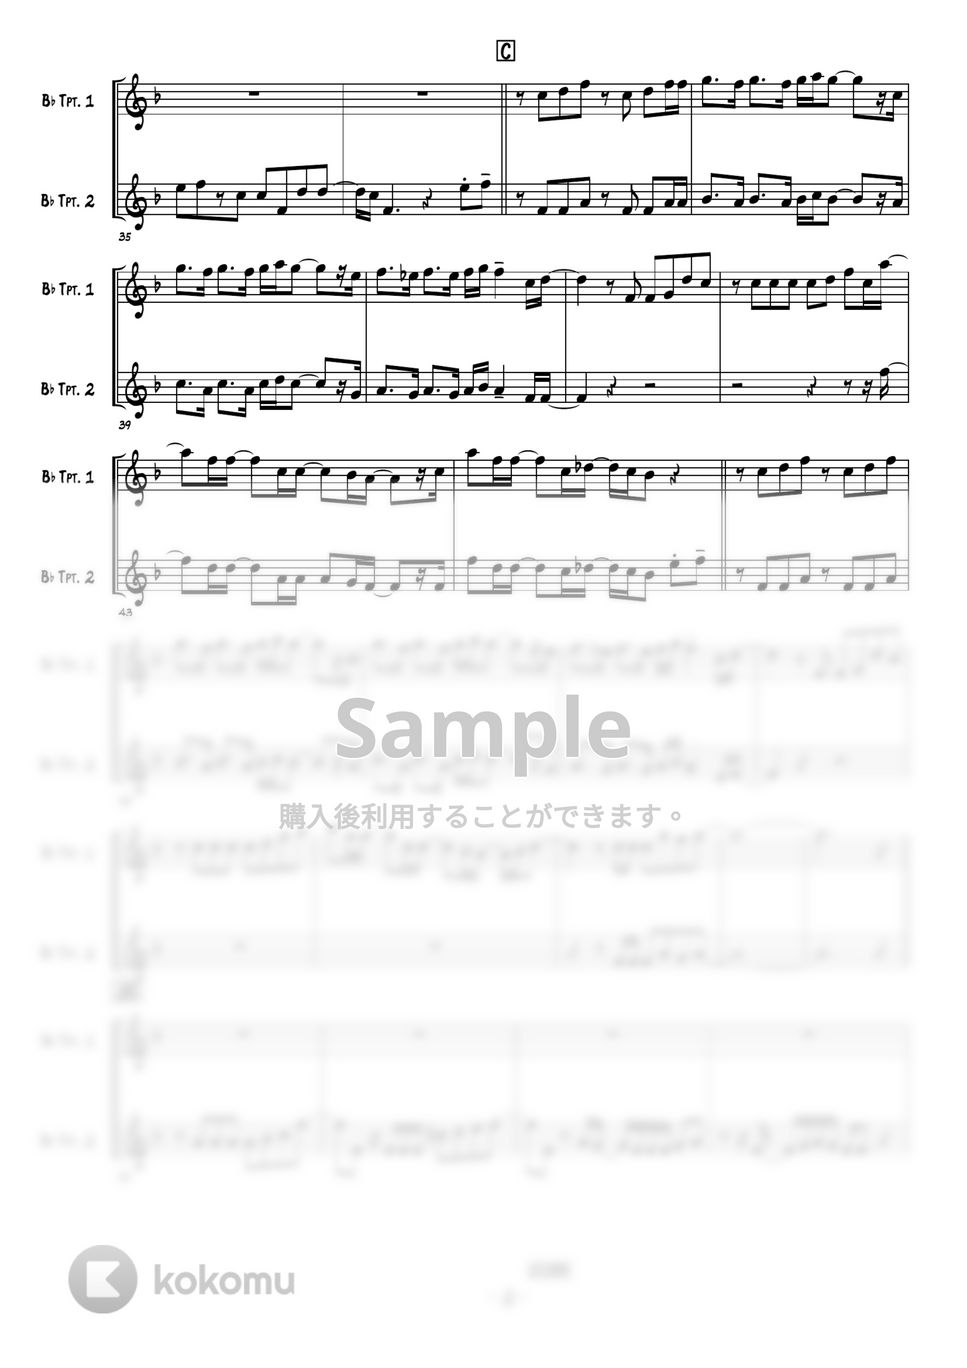 Official髭男dism - Pretender (トランペット2本) by 高田将利